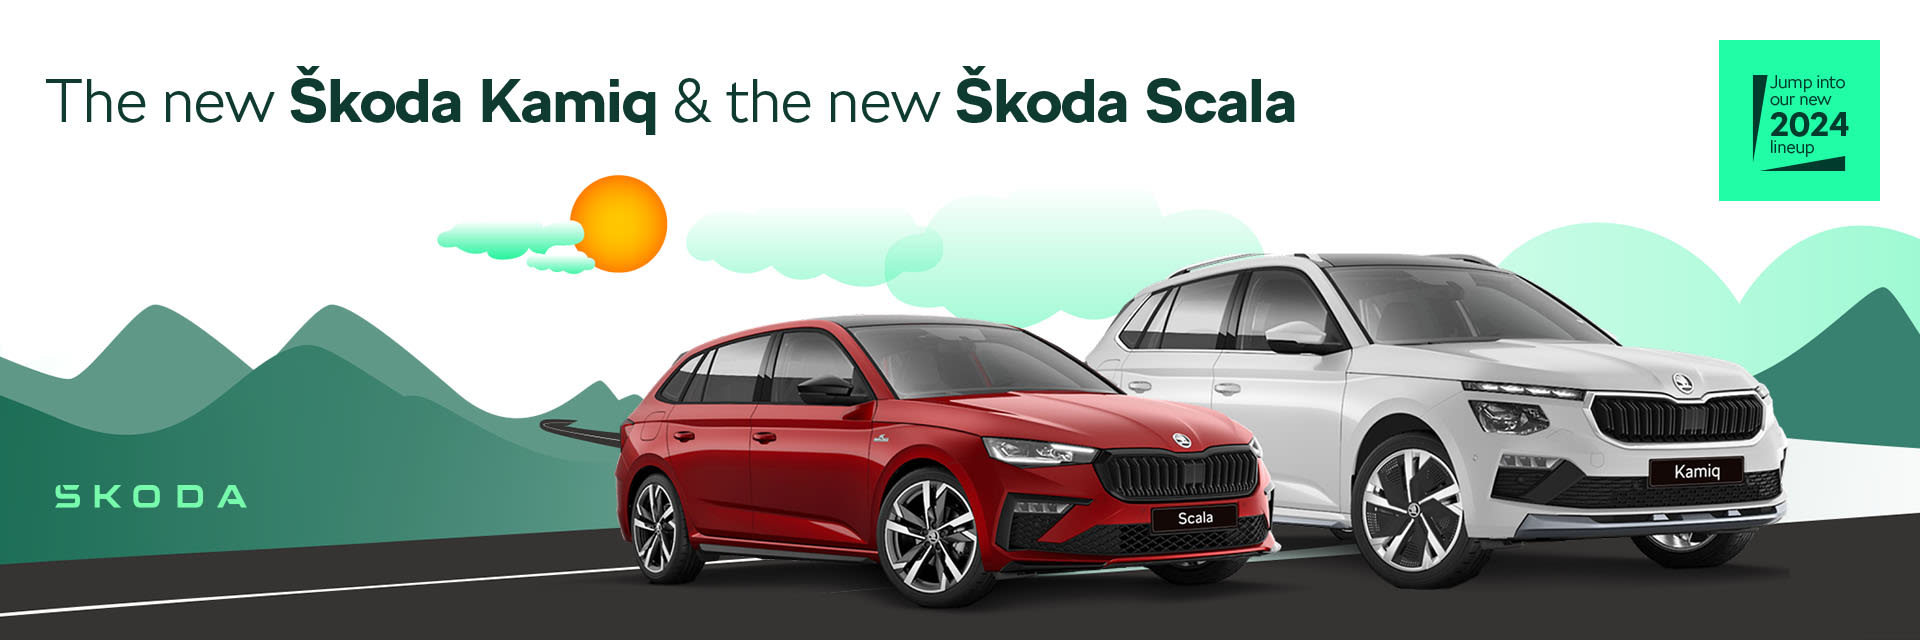 The new Skoda Kamiq & Skoda Scala